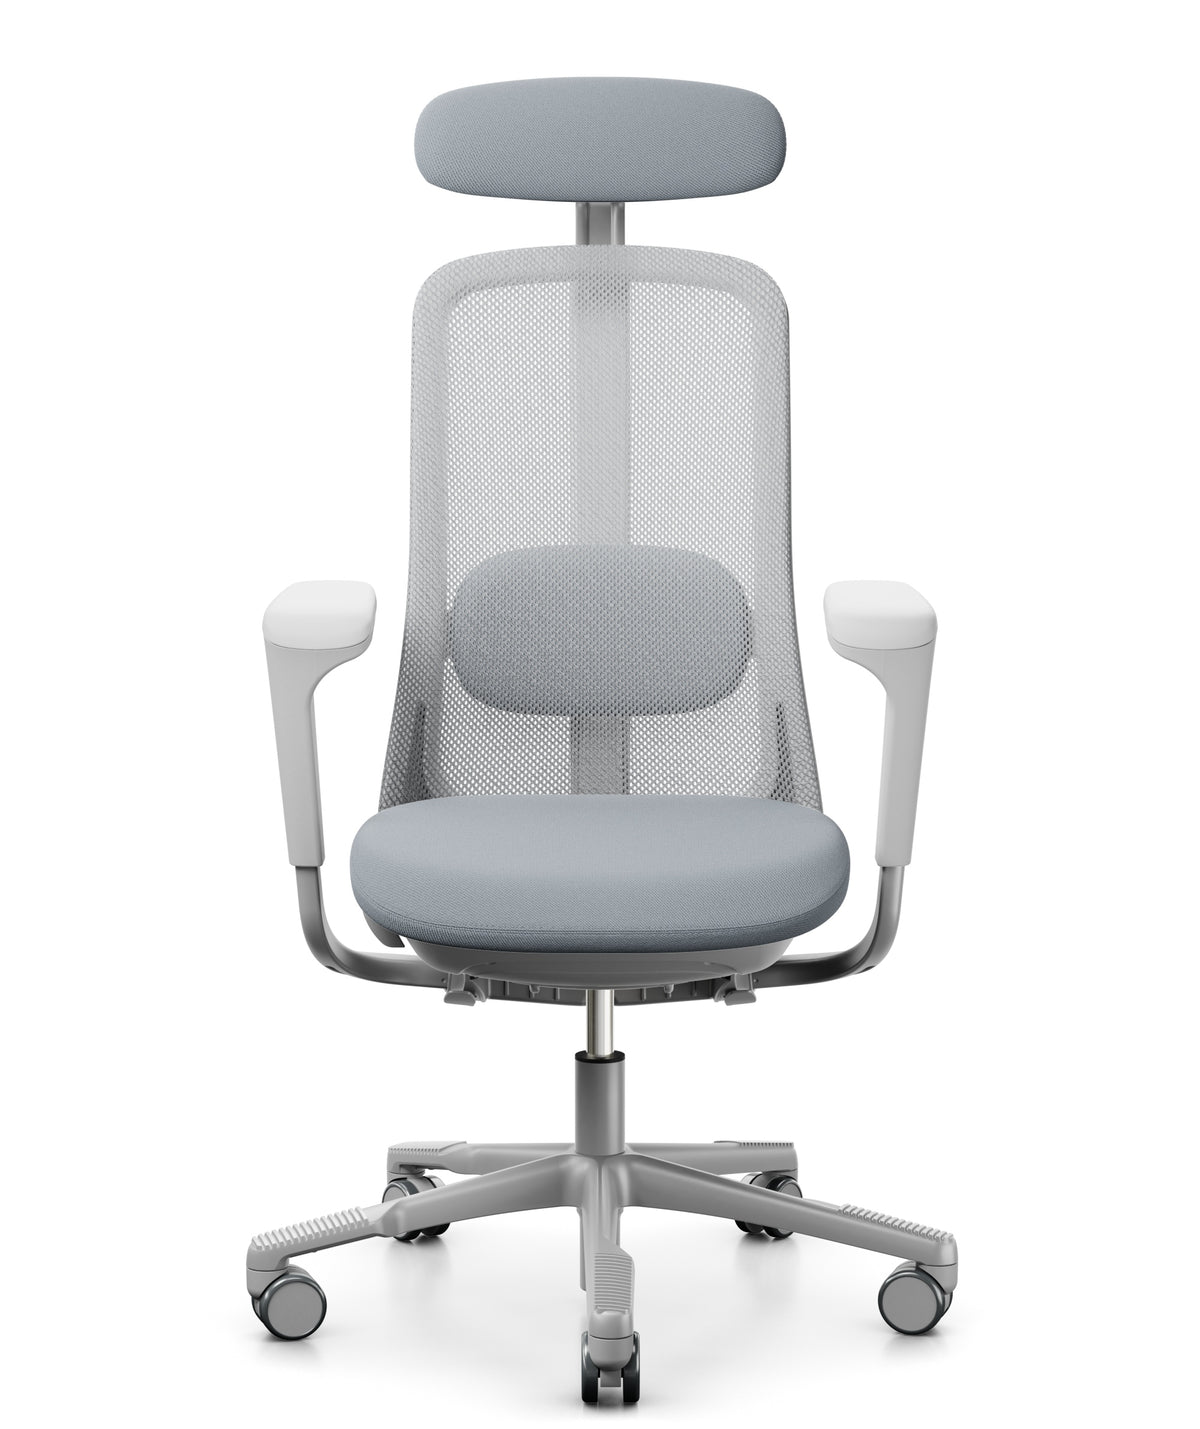 HÅG SoFi Mesh 7500 Ergonomic Office Chair with Headrest - Light Grey